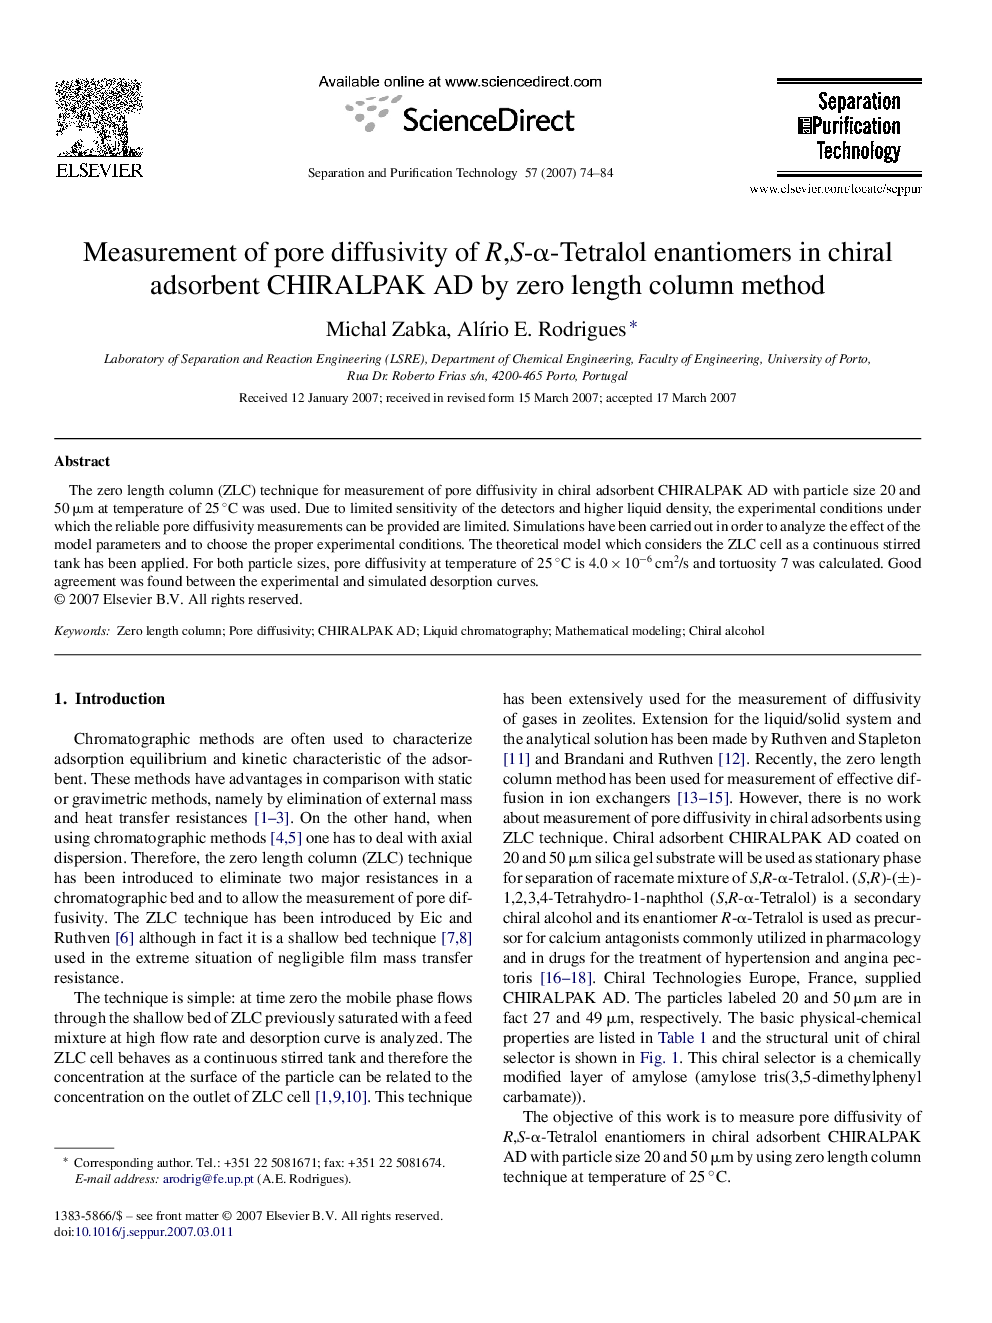 Measurement of pore diffusivity of R,S-α-Tetralol enantiomers in chiral adsorbent CHIRALPAK AD by zero length column method